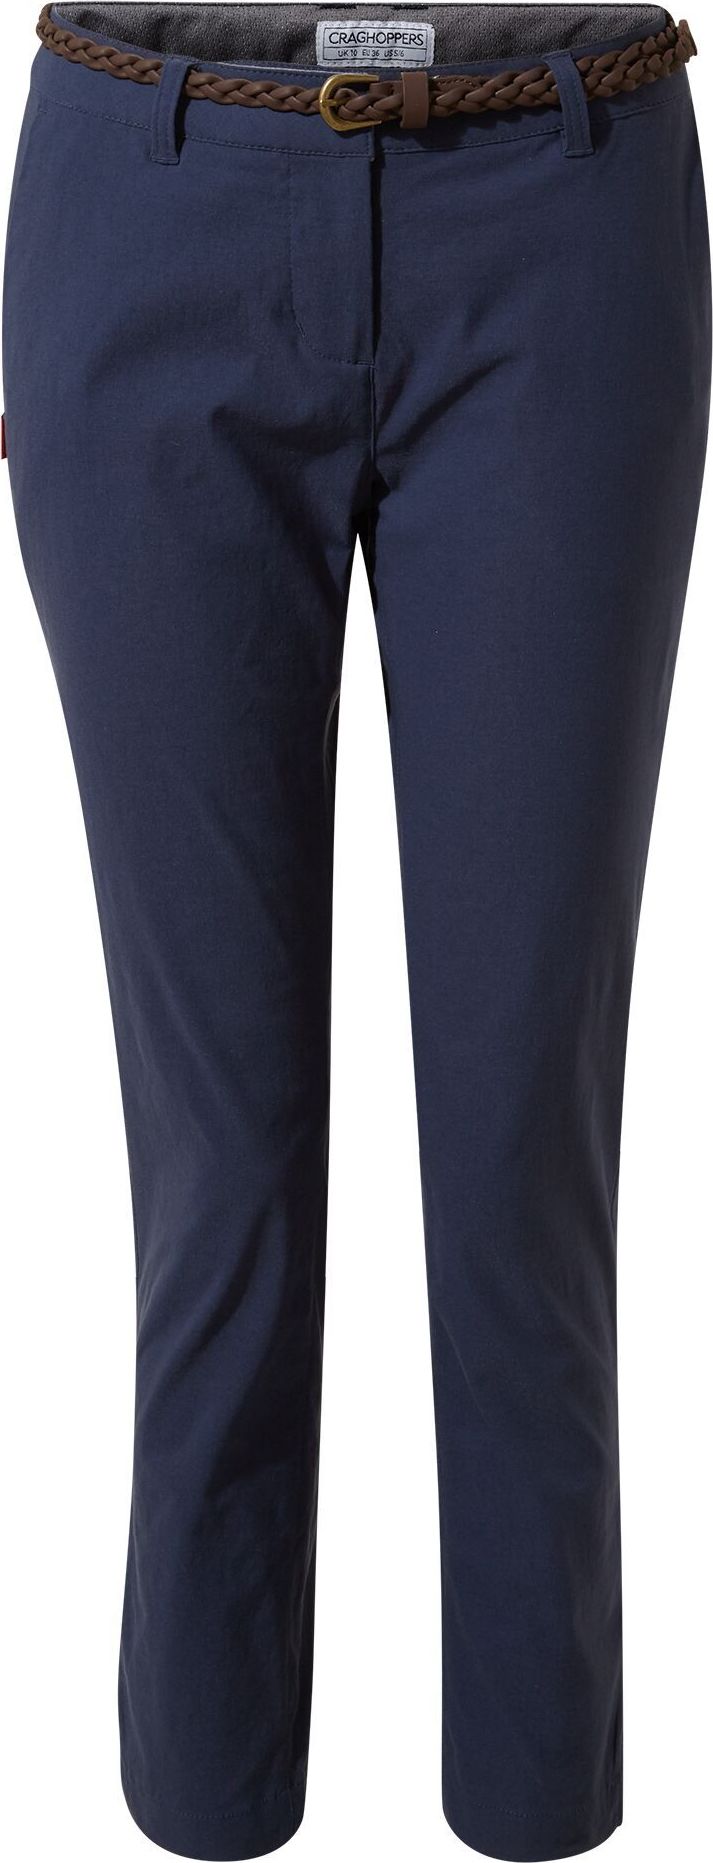 John Lewis Slim Bi-Stretch Trousers, Navy at John Lewis & Partners